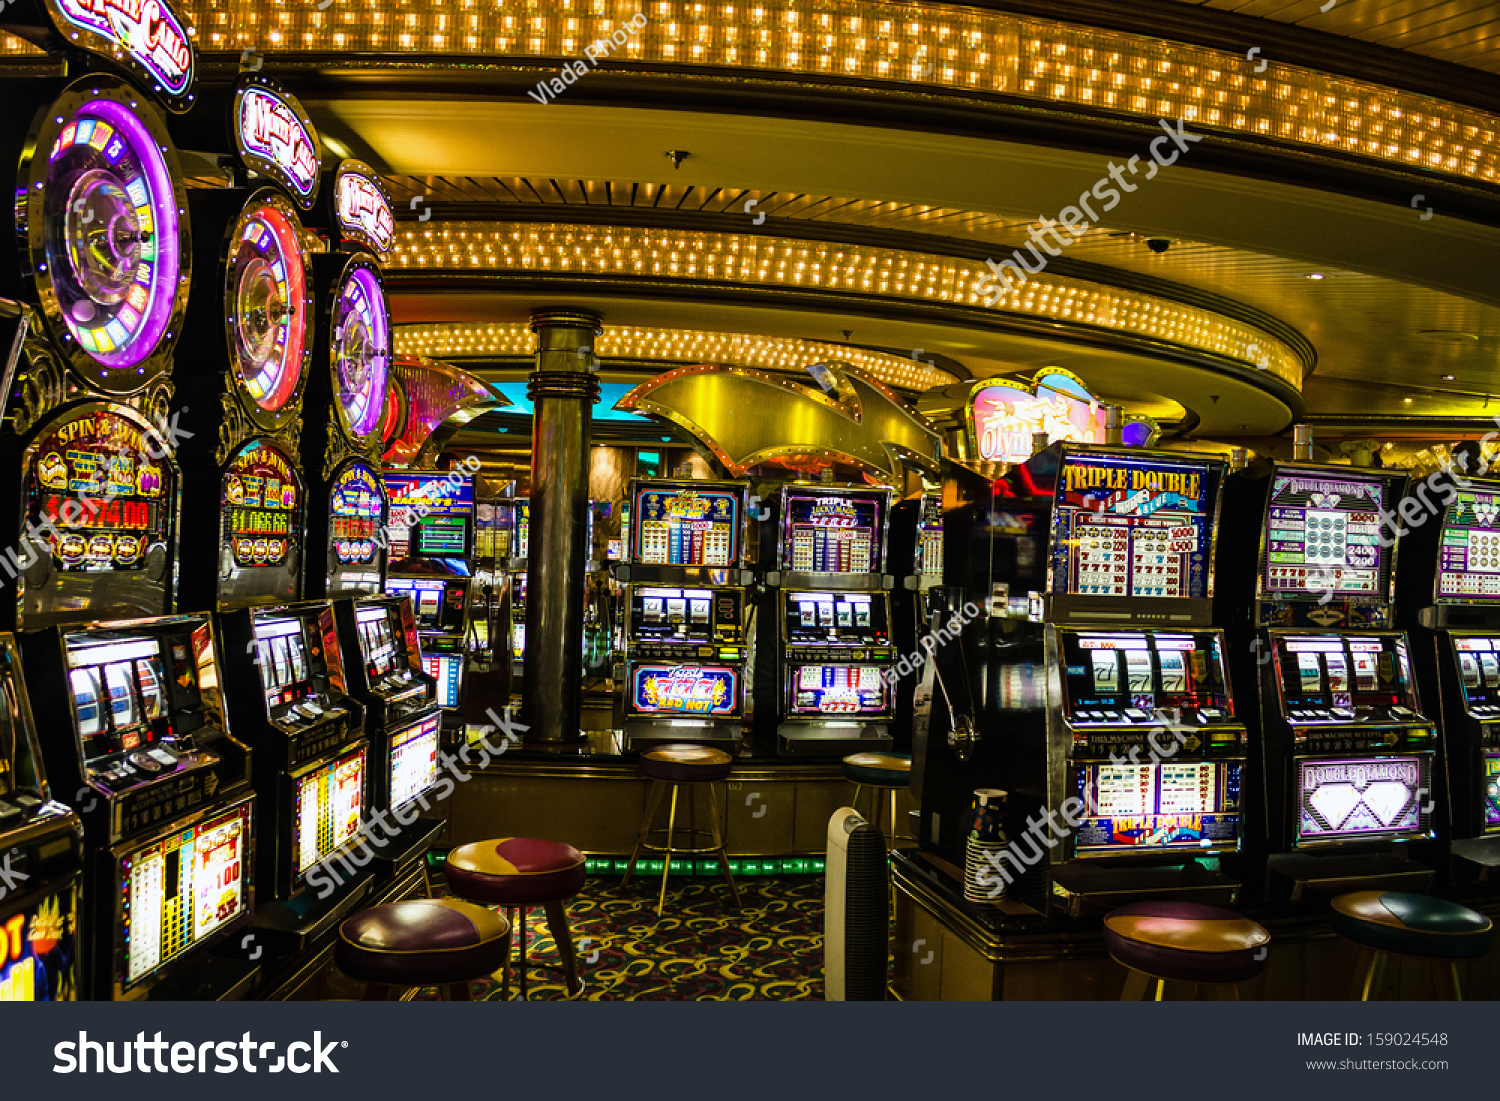 Online Casino - 679114